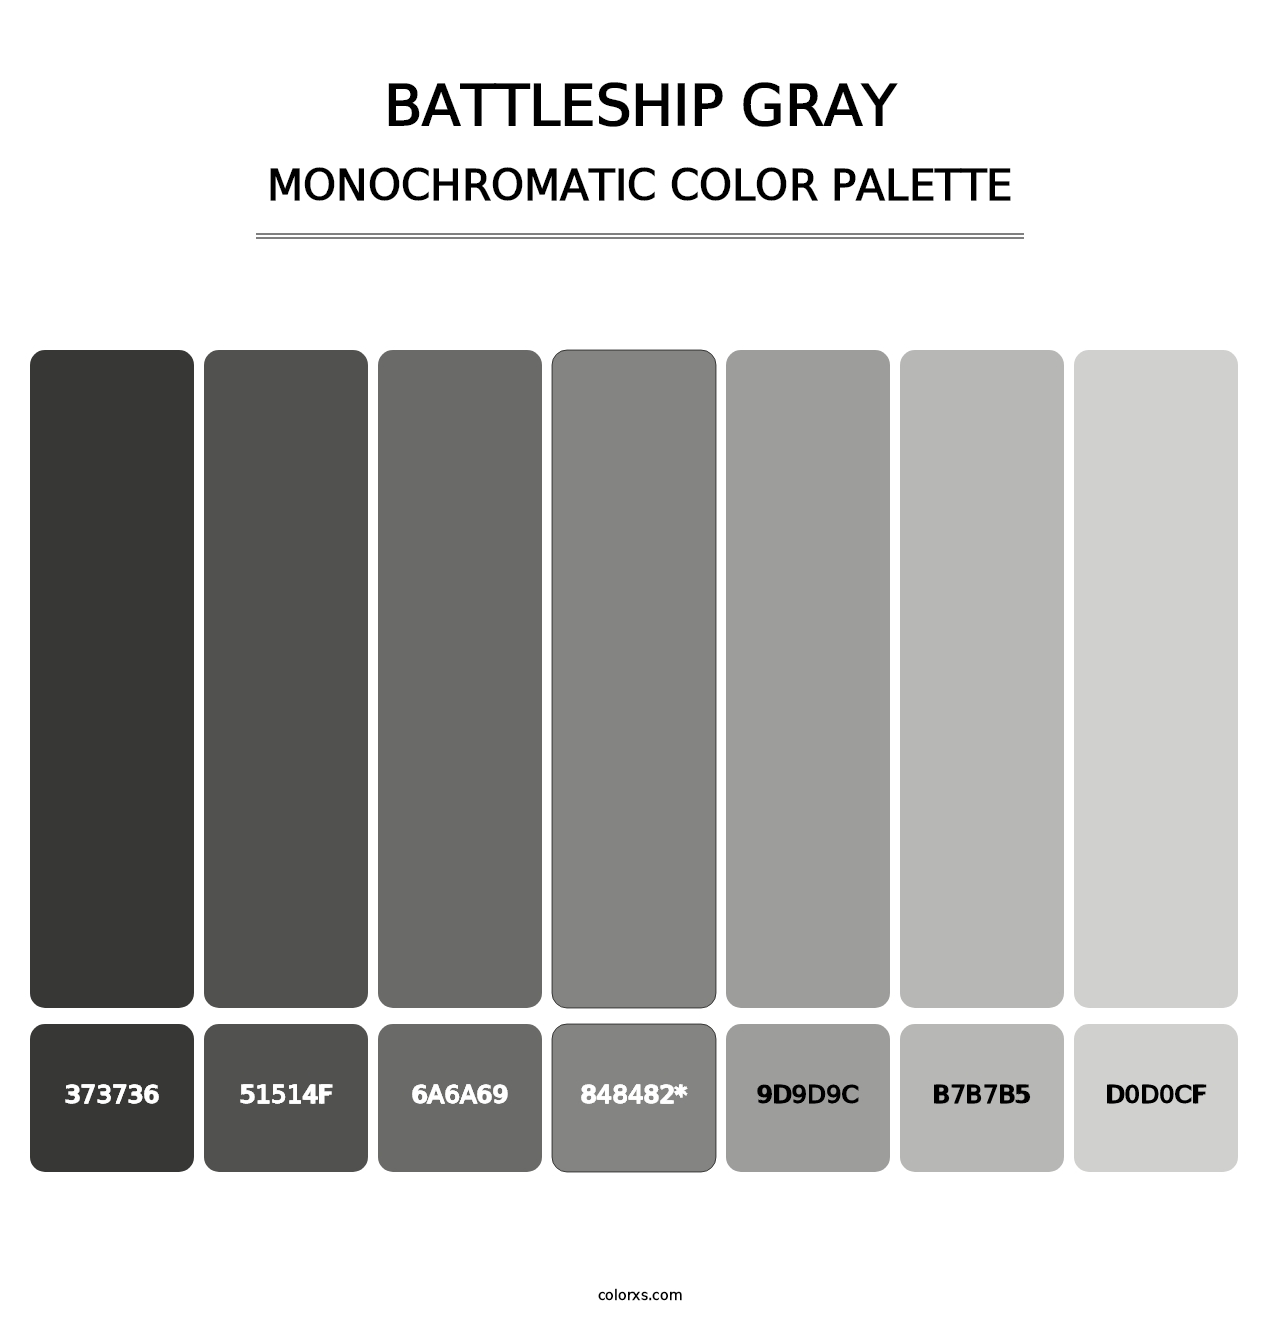 Battleship Gray - Monochromatic Color Palette